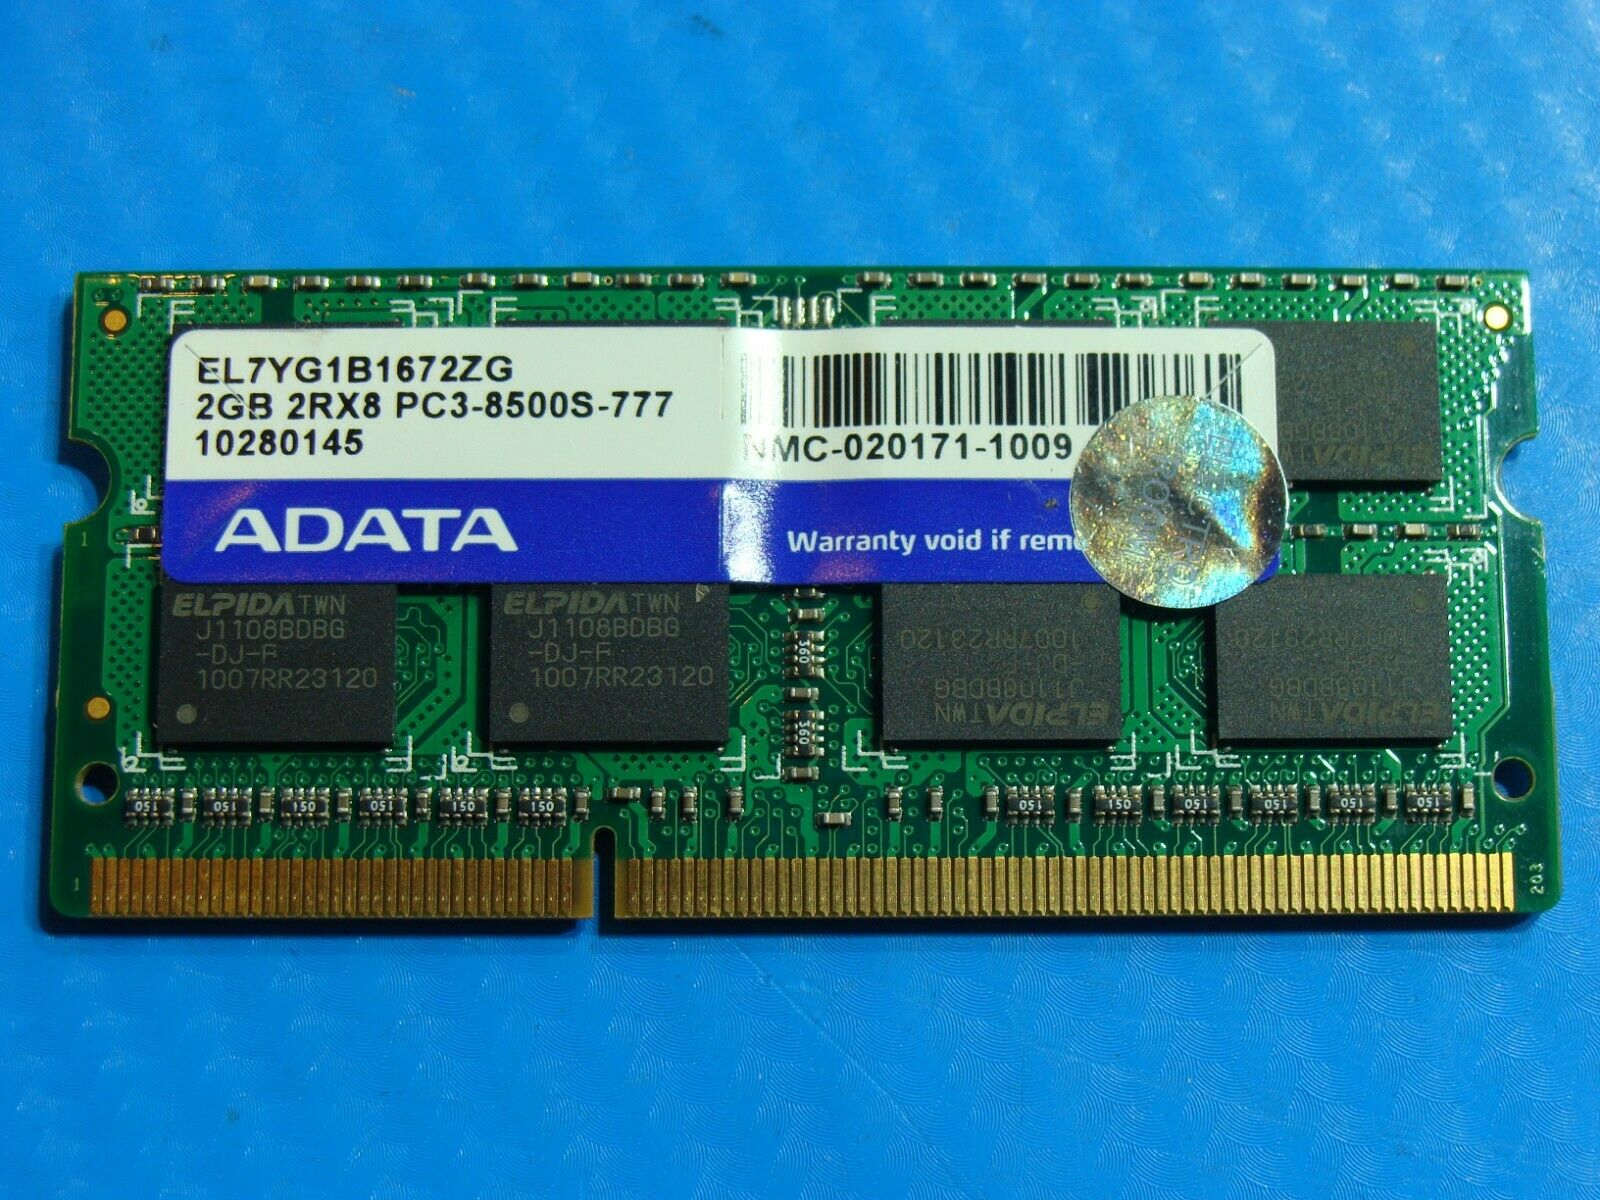 Sony PCG-71312L ADATA 2GB 2Rx8 PC3-8500S SO-DIMM Memory RAM EL7YG1B1672ZG #1 - Laptop Parts - Buy Authentic Computer Parts - Top Seller Ebay